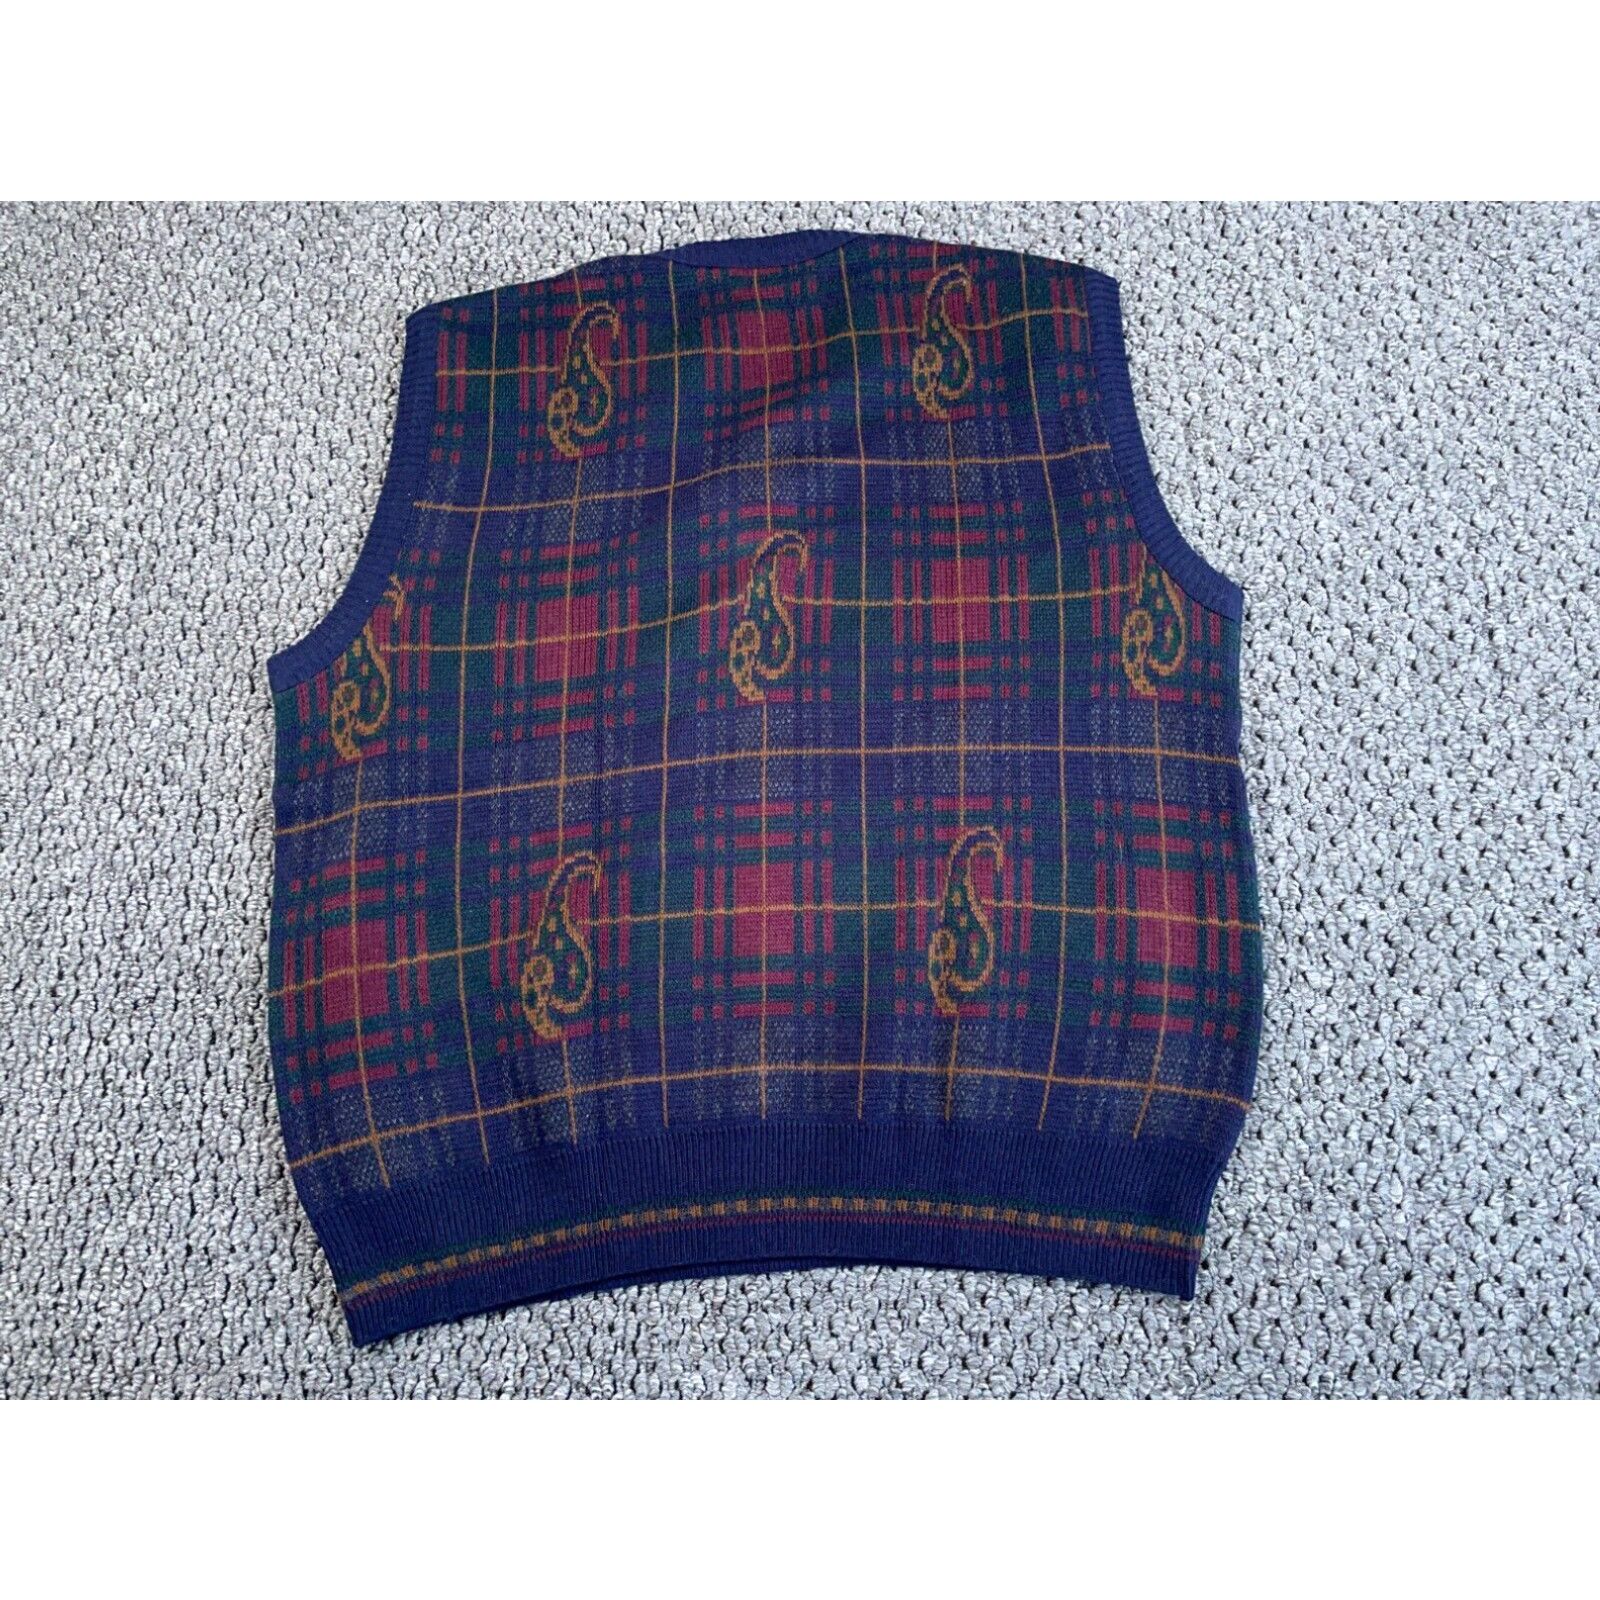 Vintage VTG 80s Eaton Shadow Plaid Paisley Sweater Vest Adult XL Blue Italy Knit Size US XL / EU 56 / 4 - 2 Preview